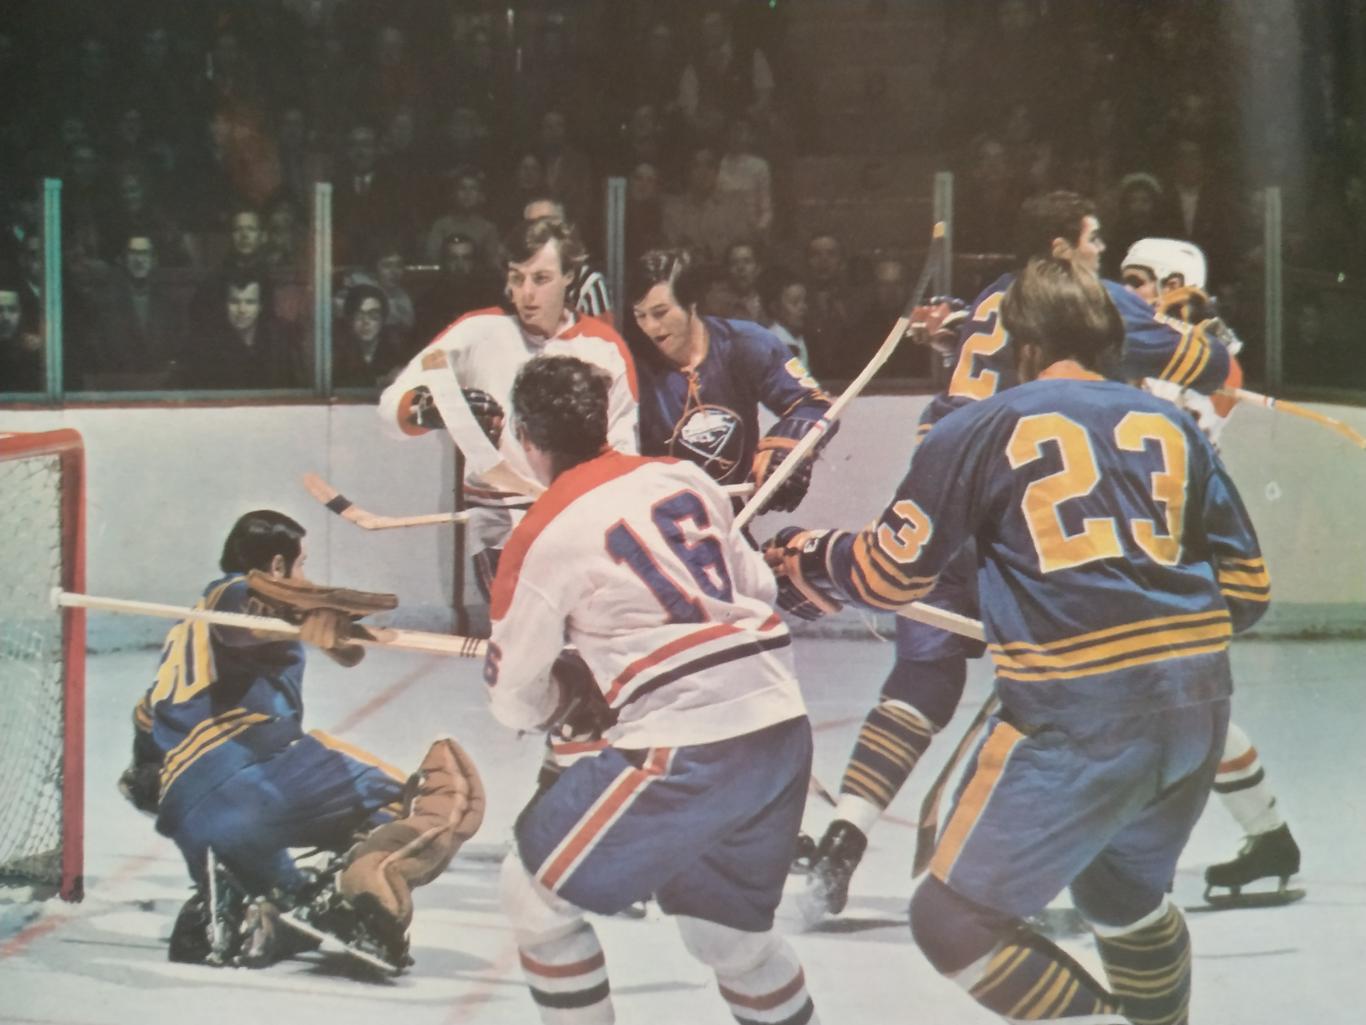 ХОККЕЙ ПРОГРАММА АЛЬБОМ БАФФАЛО НХЛ NHL 1971 OCT.16 BUFFALO PROGRAM 5